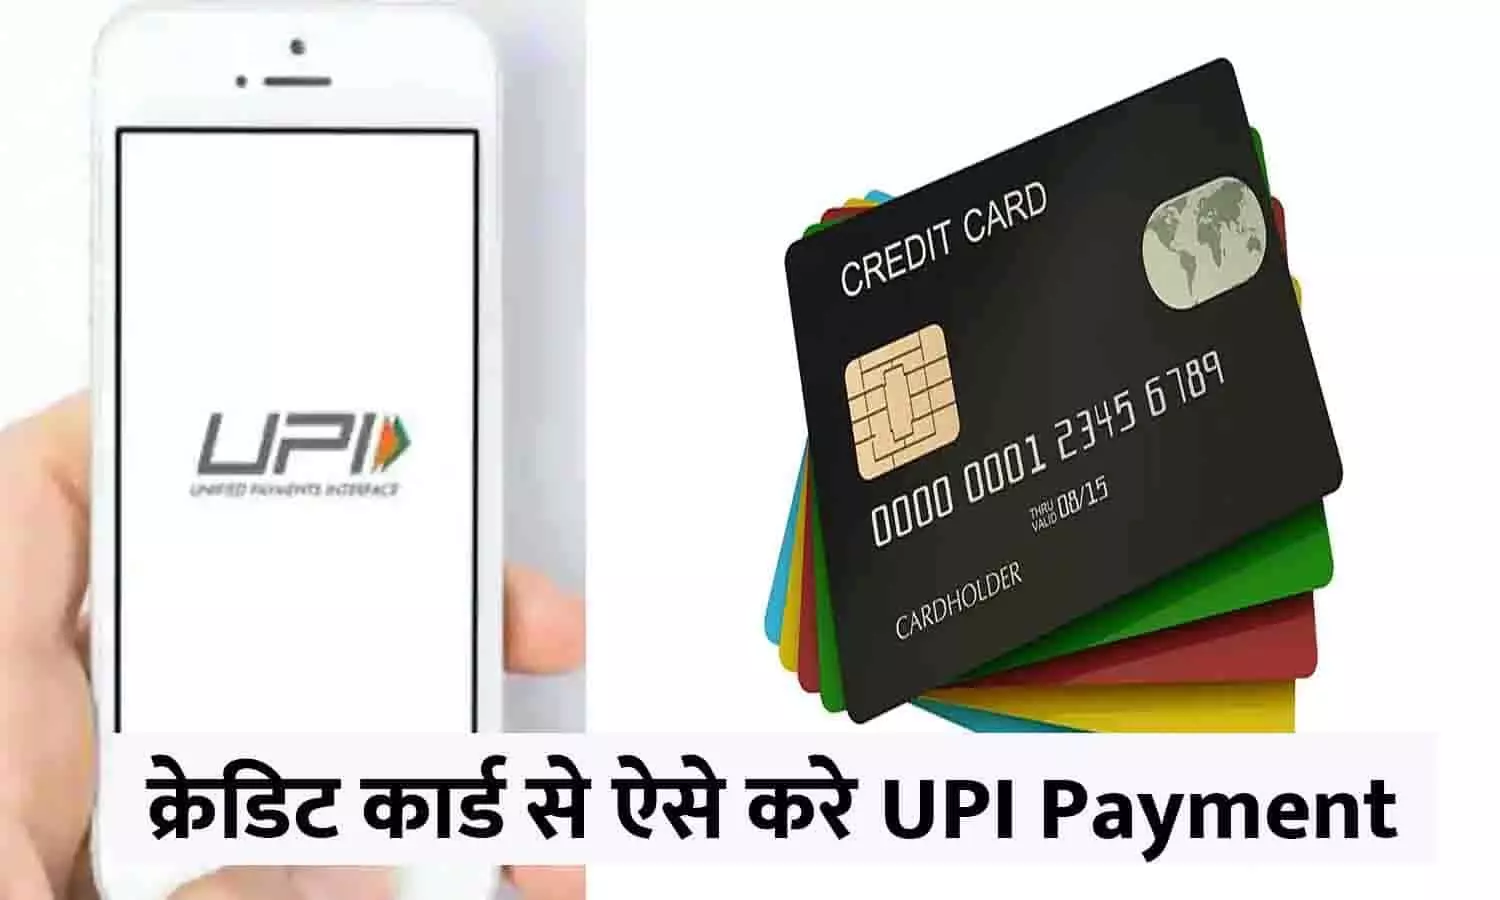 Credit Card Se UPI Payment Kaise Kare 2023: क्रेडिट कार्ड से UPI Payment करने का आसान तरीका, फटाफट जाने आसान प्रोसेस